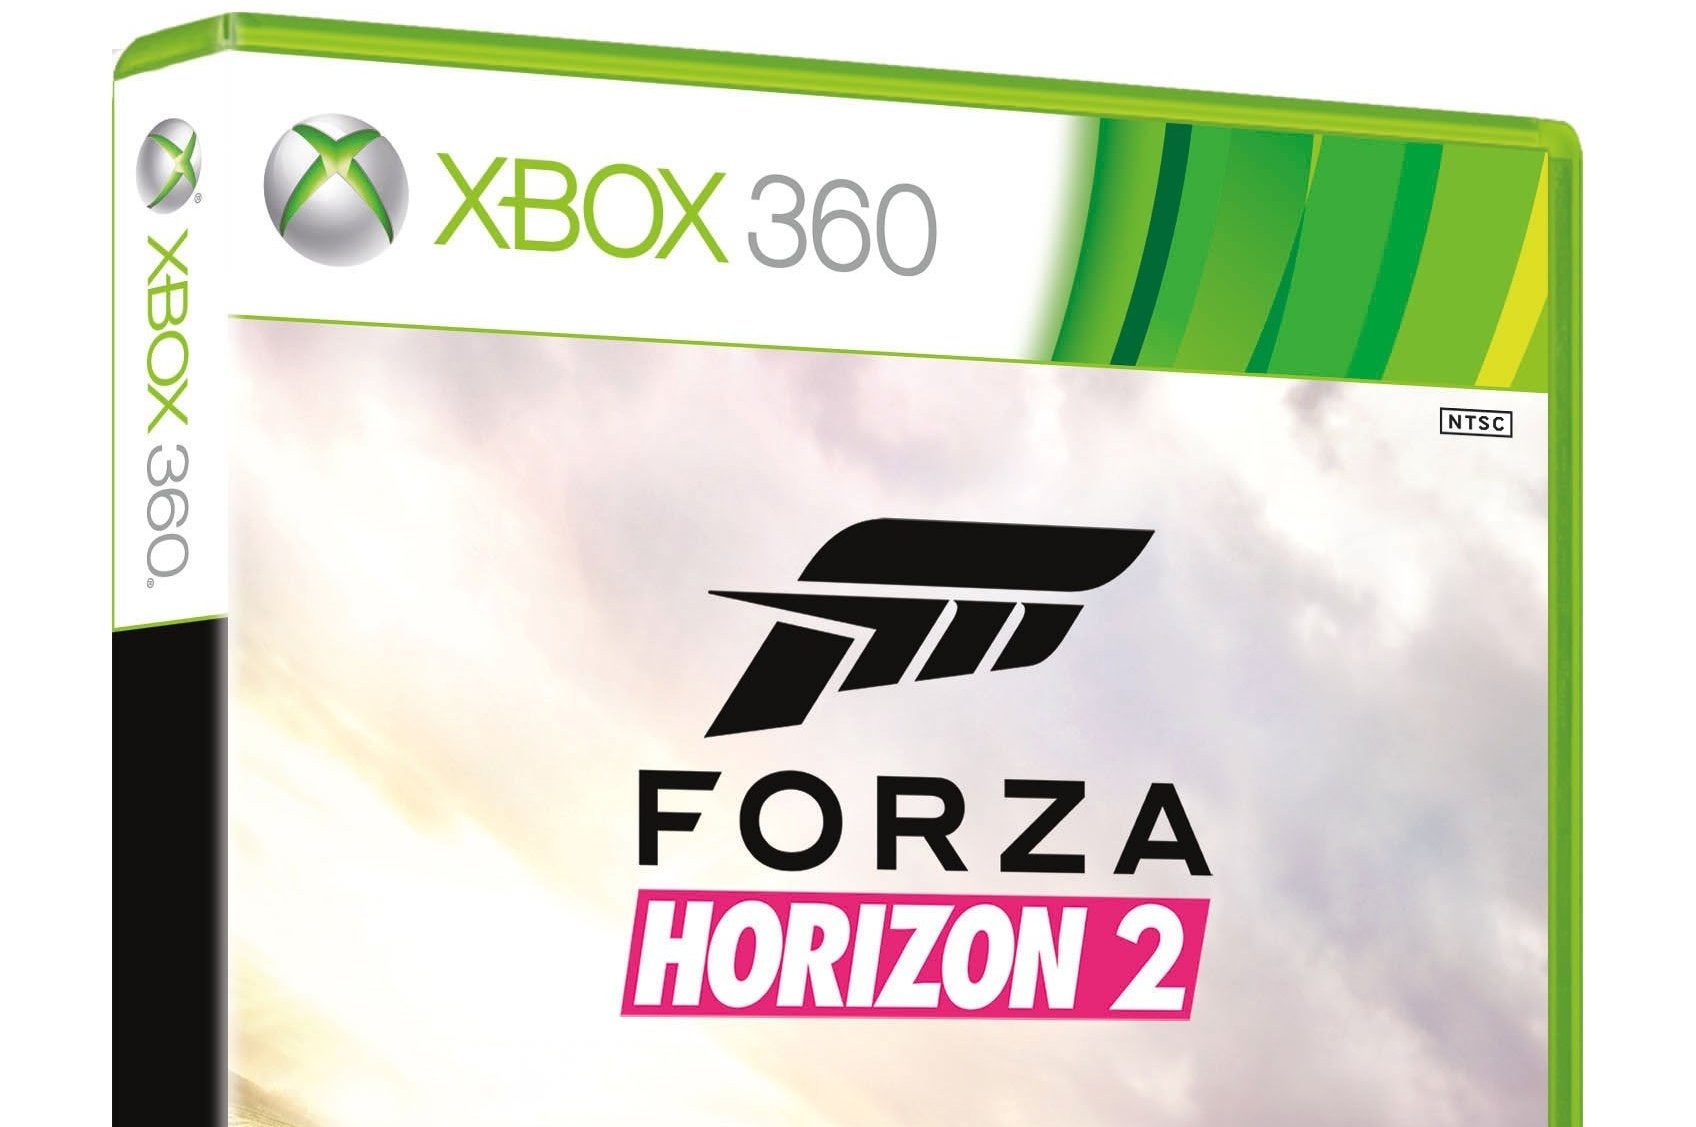 Image for No DLC for Forza Horizon 2 on Xbox 360